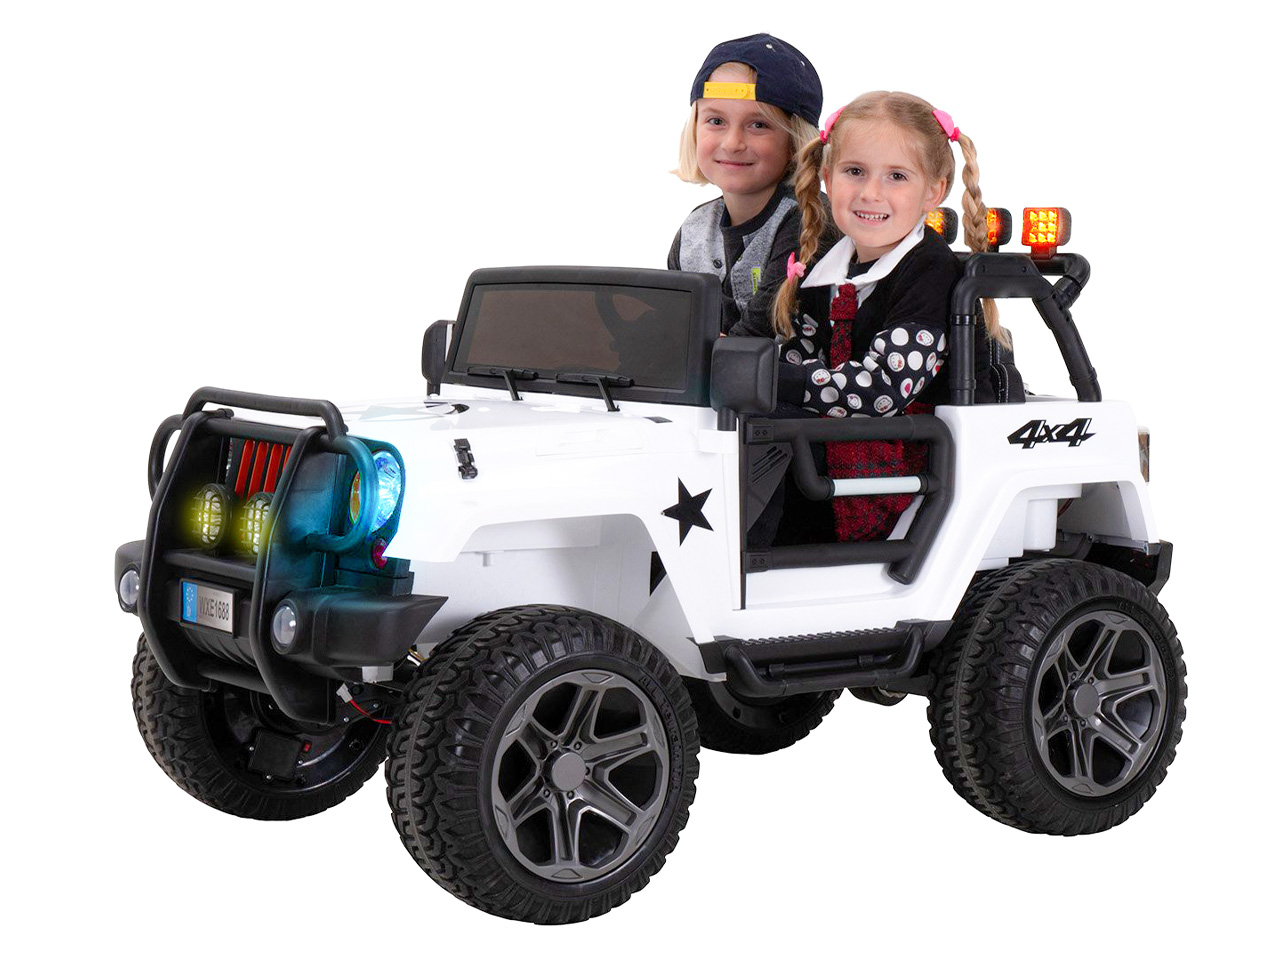 Kinder-Elektroauto Wrangler Offroad Jeep ALLRAD 2-Sitzer von Actionbikes - Startbild